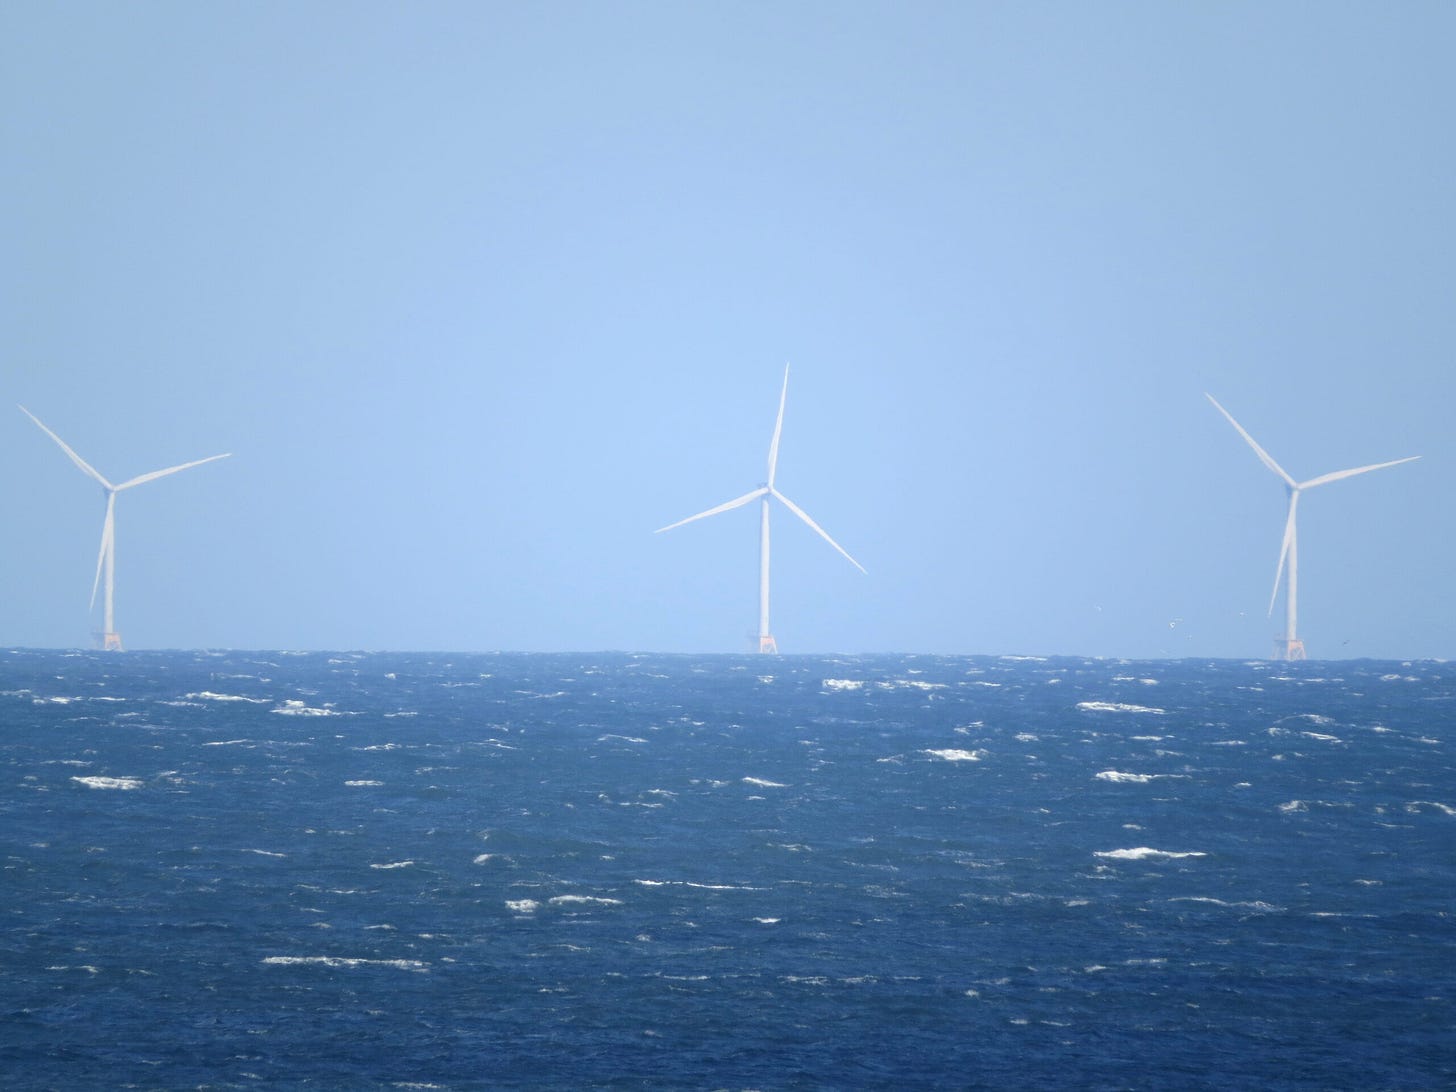 The Block Island wind farm, from Montauk Point, on Long Island, New York on April 16, 2021. Credit: Mark Harrington/Newsday RM via Getty Images